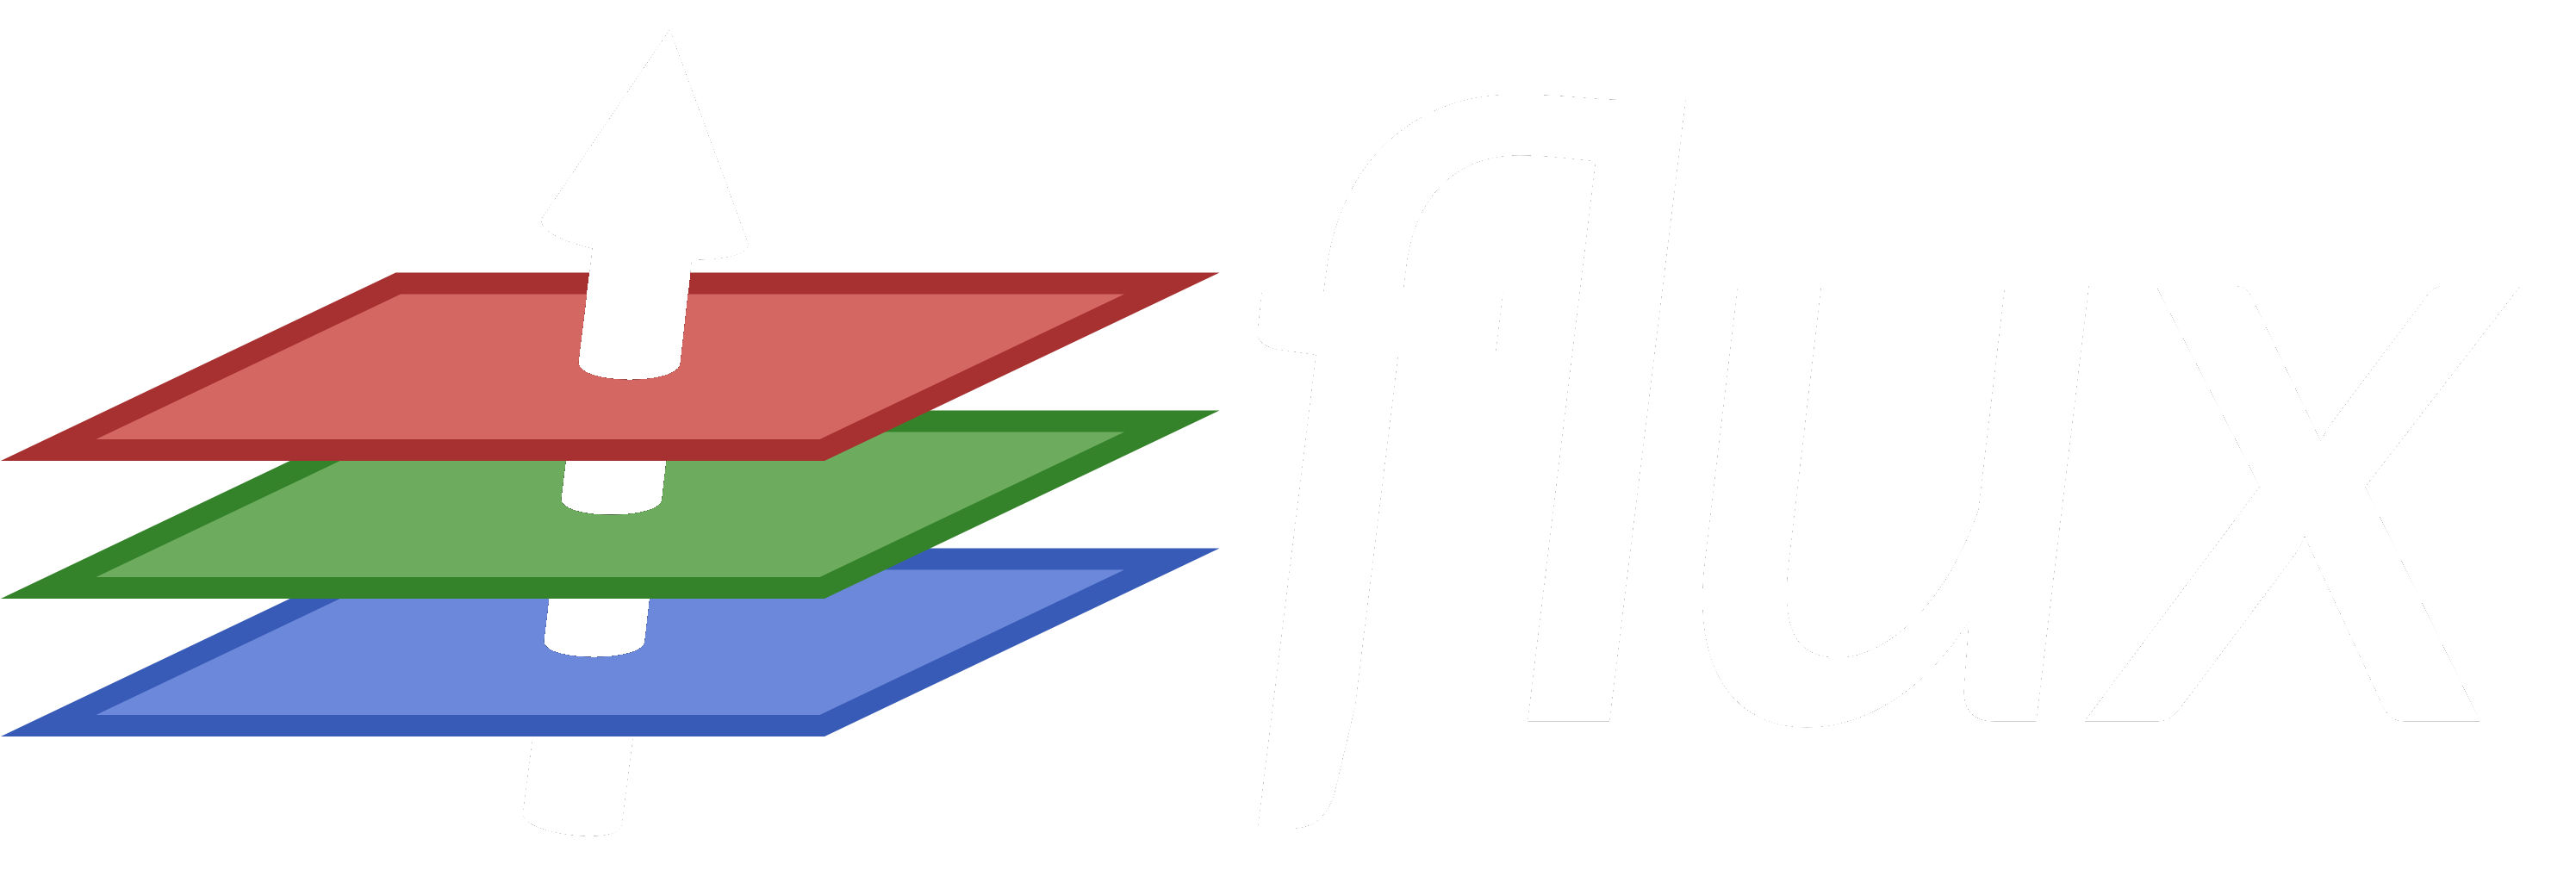 Fluxus logo.